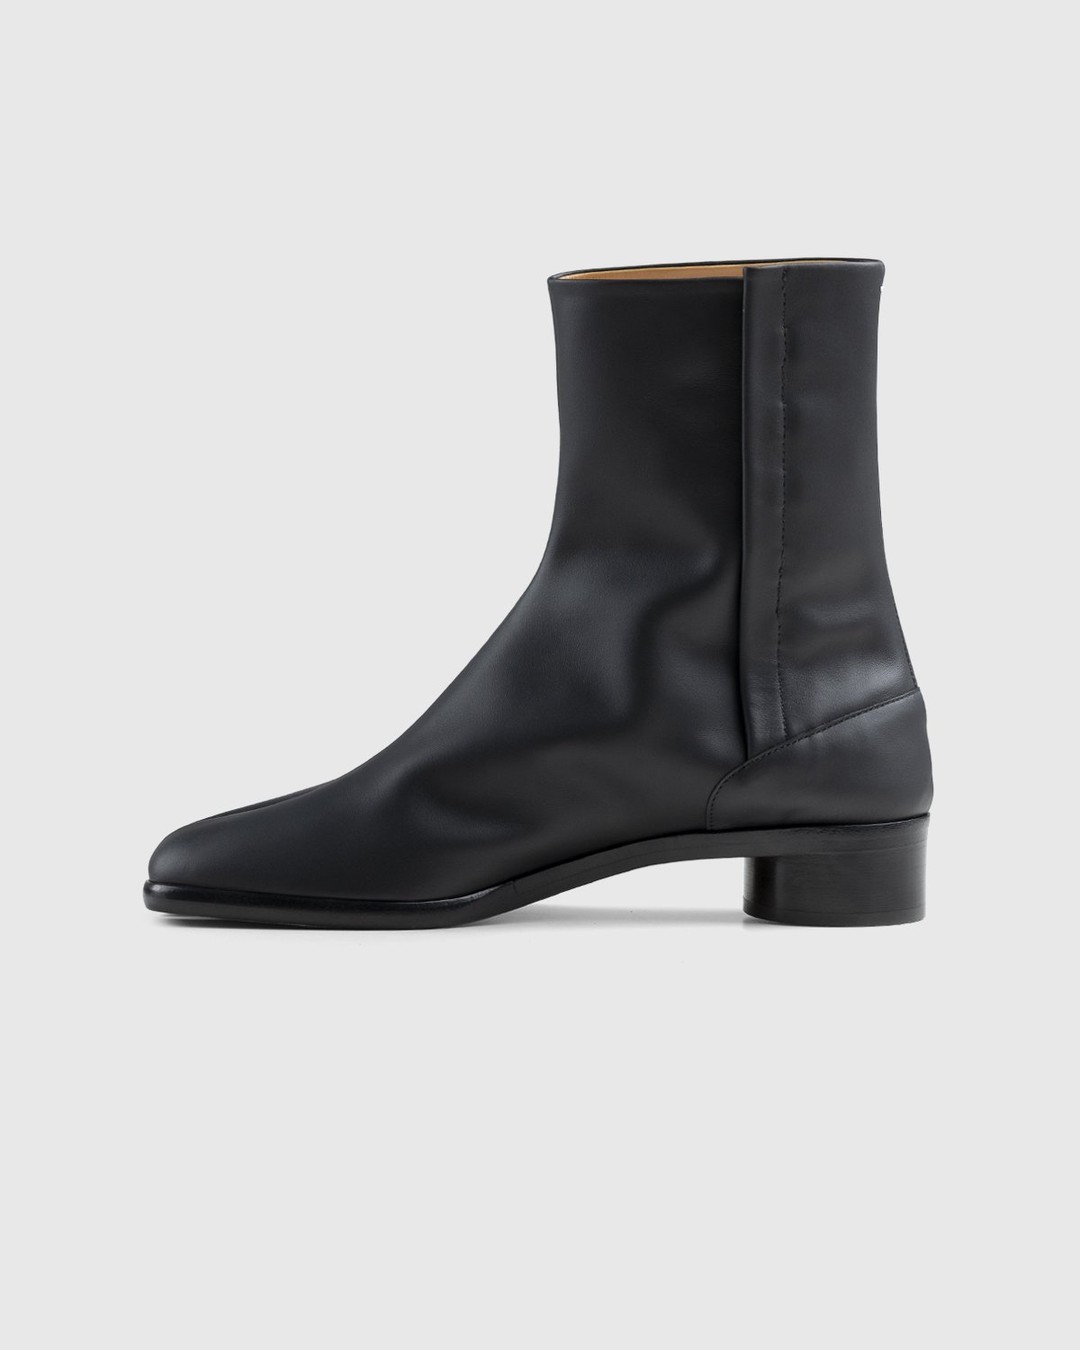 Maison Margiela – Tabi Ankle Boot Black - Heels - Black - Image 2